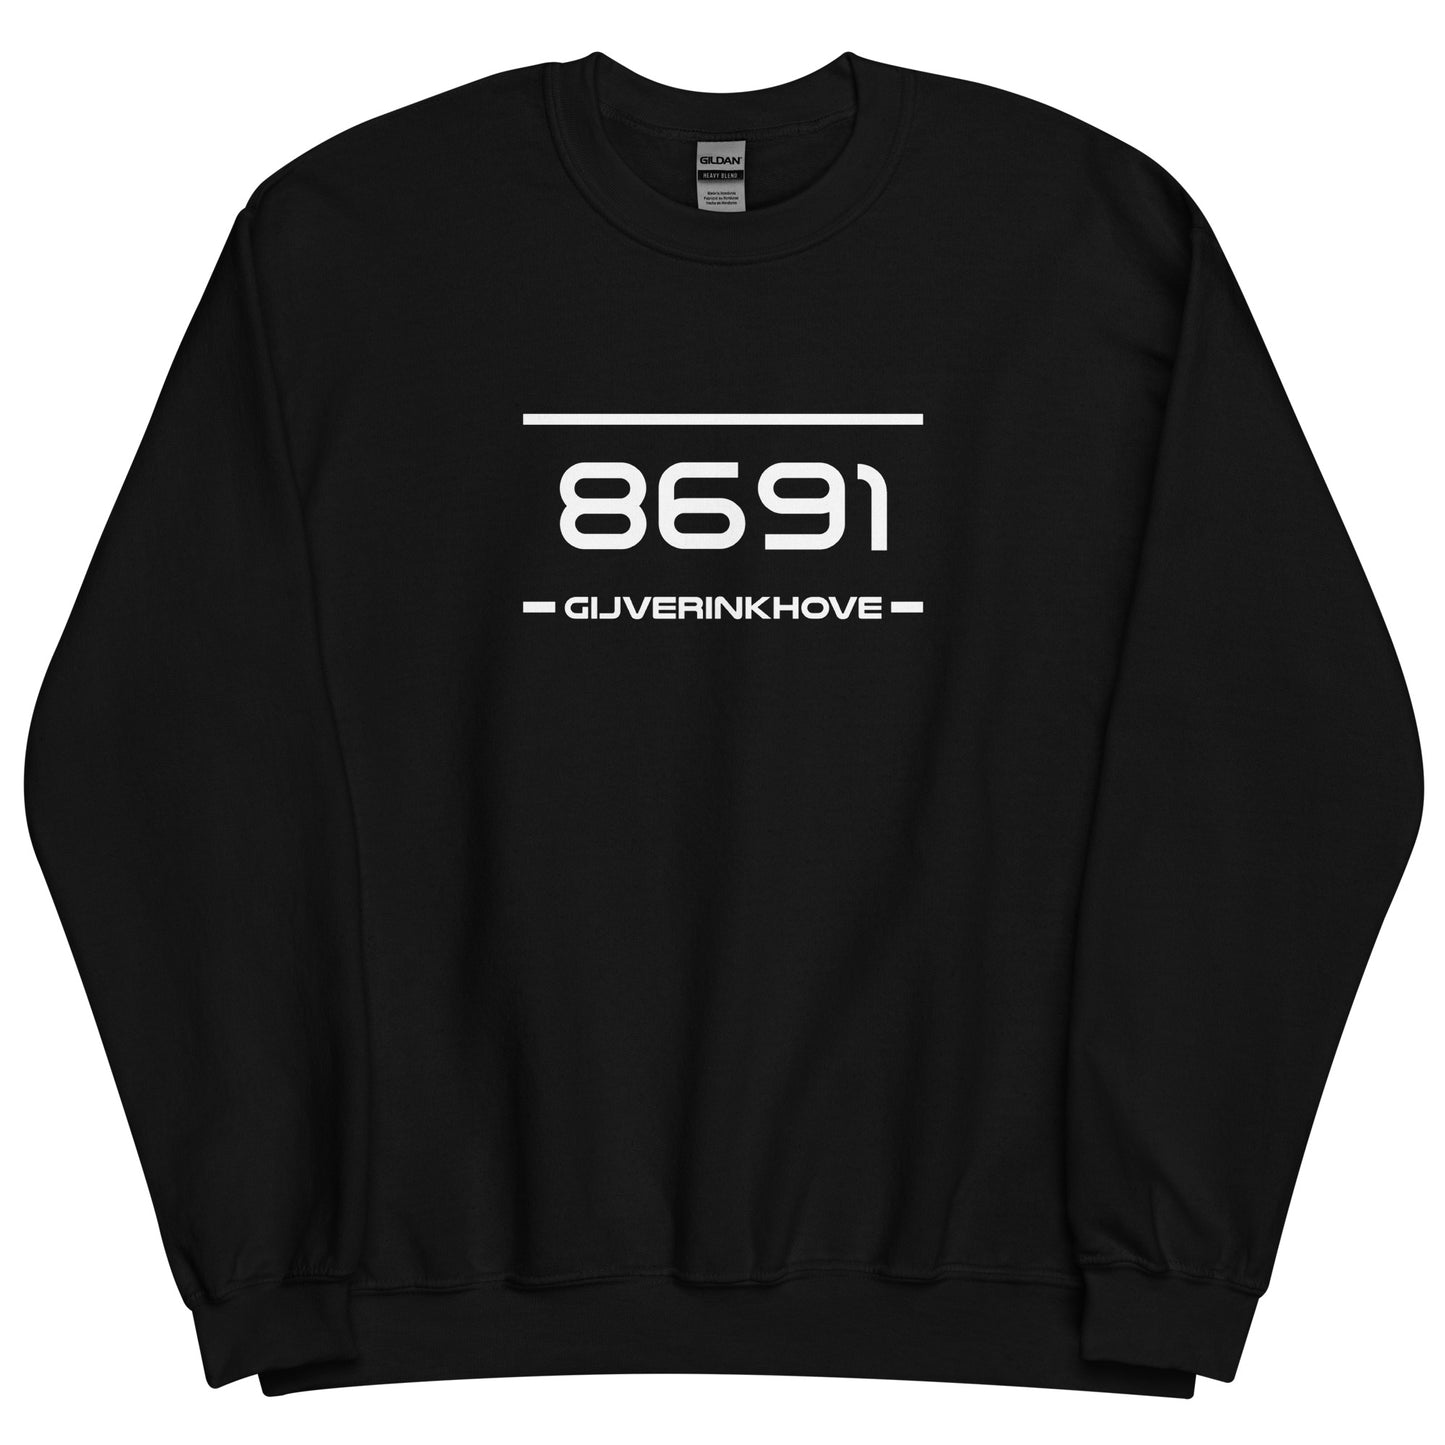 Sweater - 8691 - Gijverinkhove (M/V)